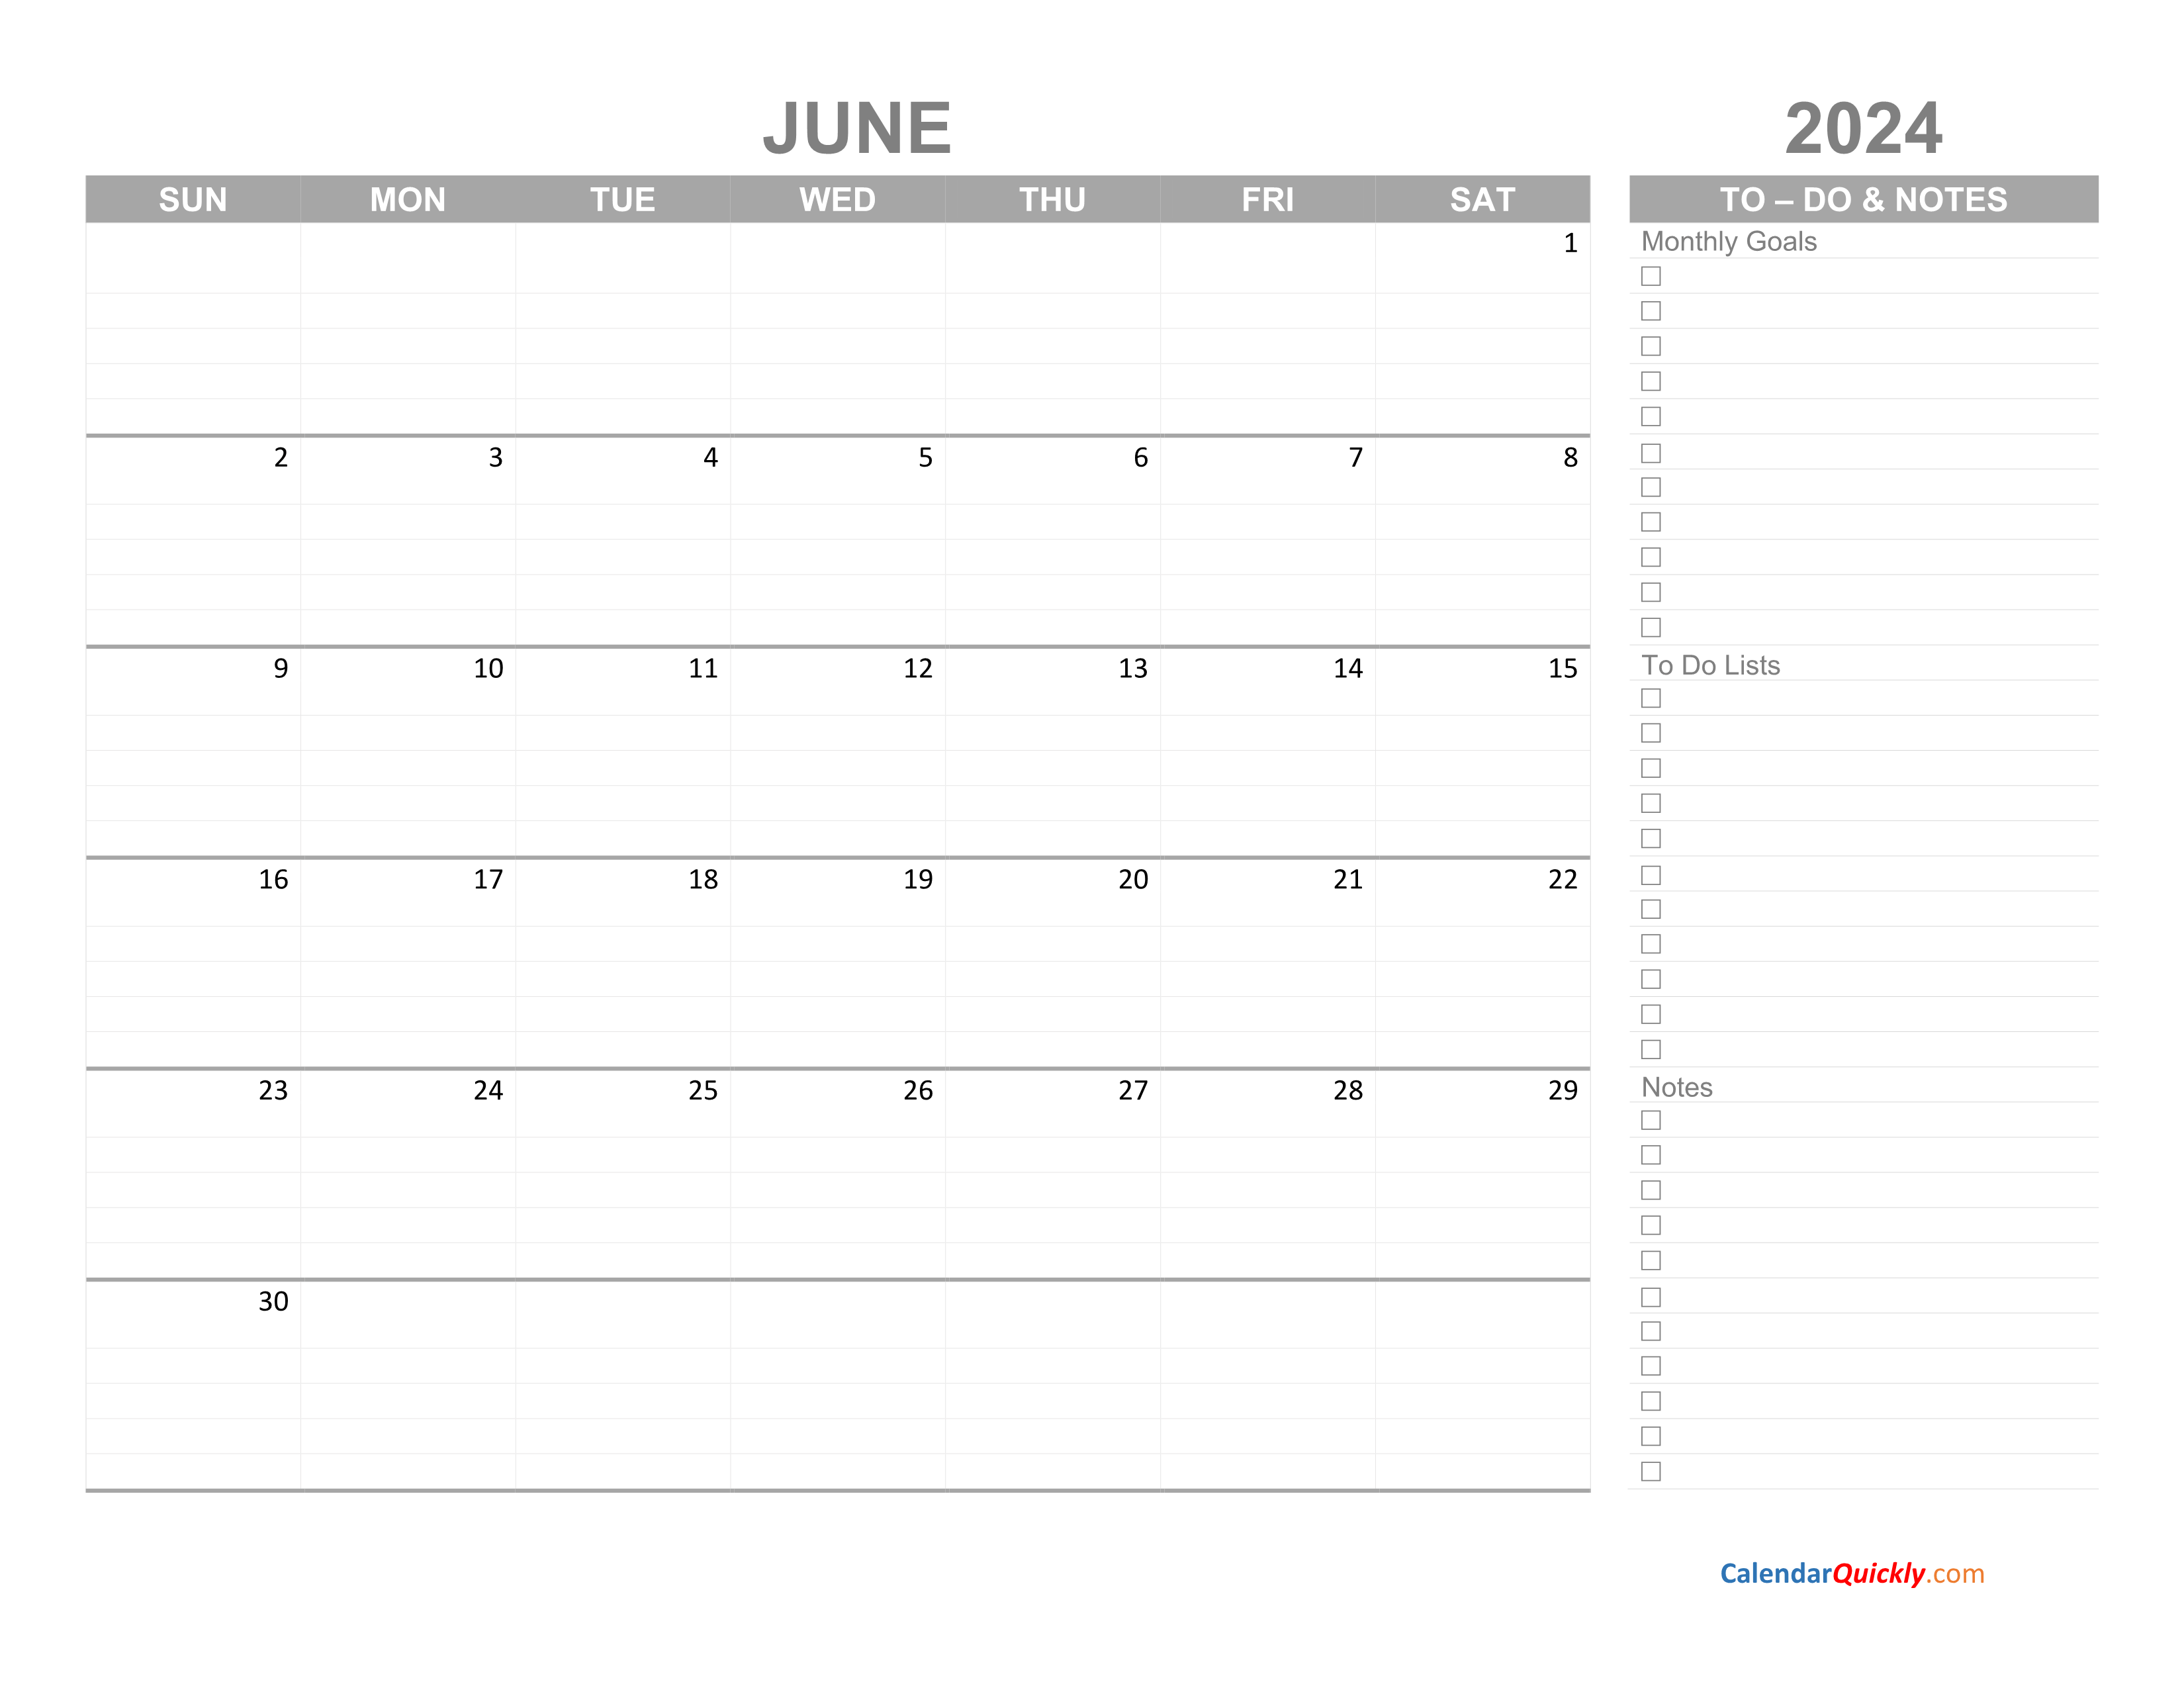 June 2024 Calendar with ToDo List Calendar Quickly